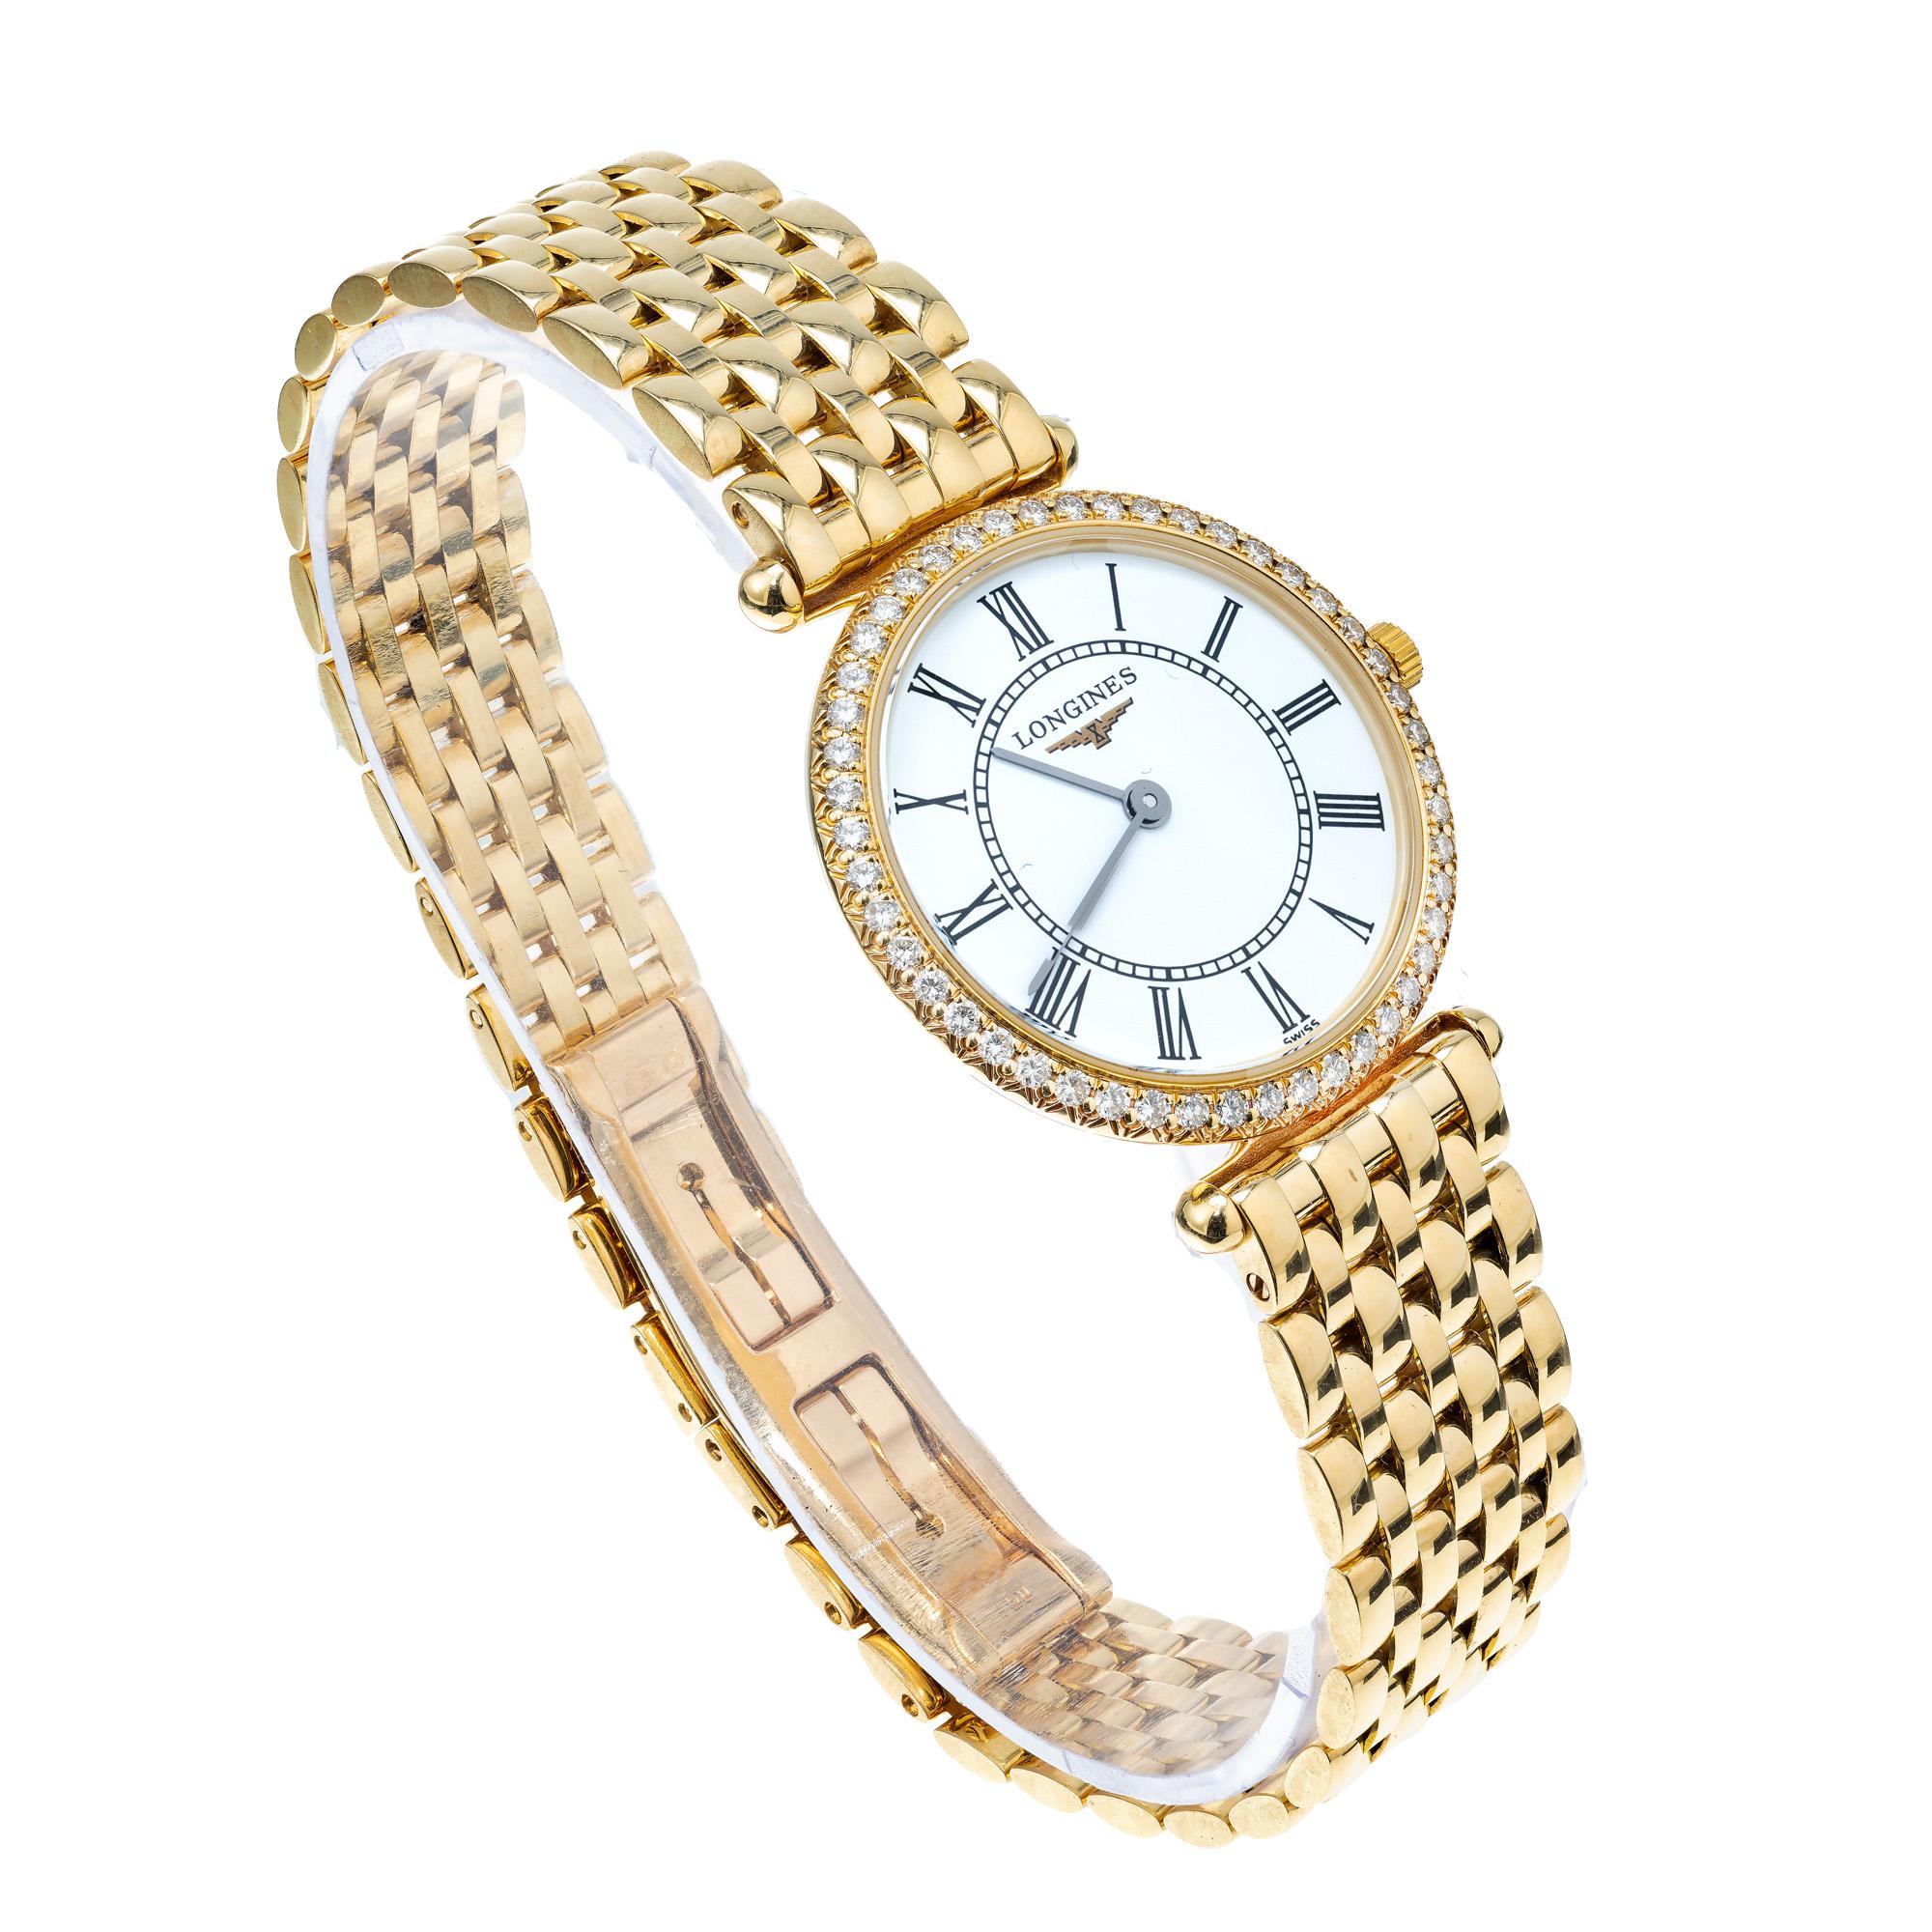 30 carat watch